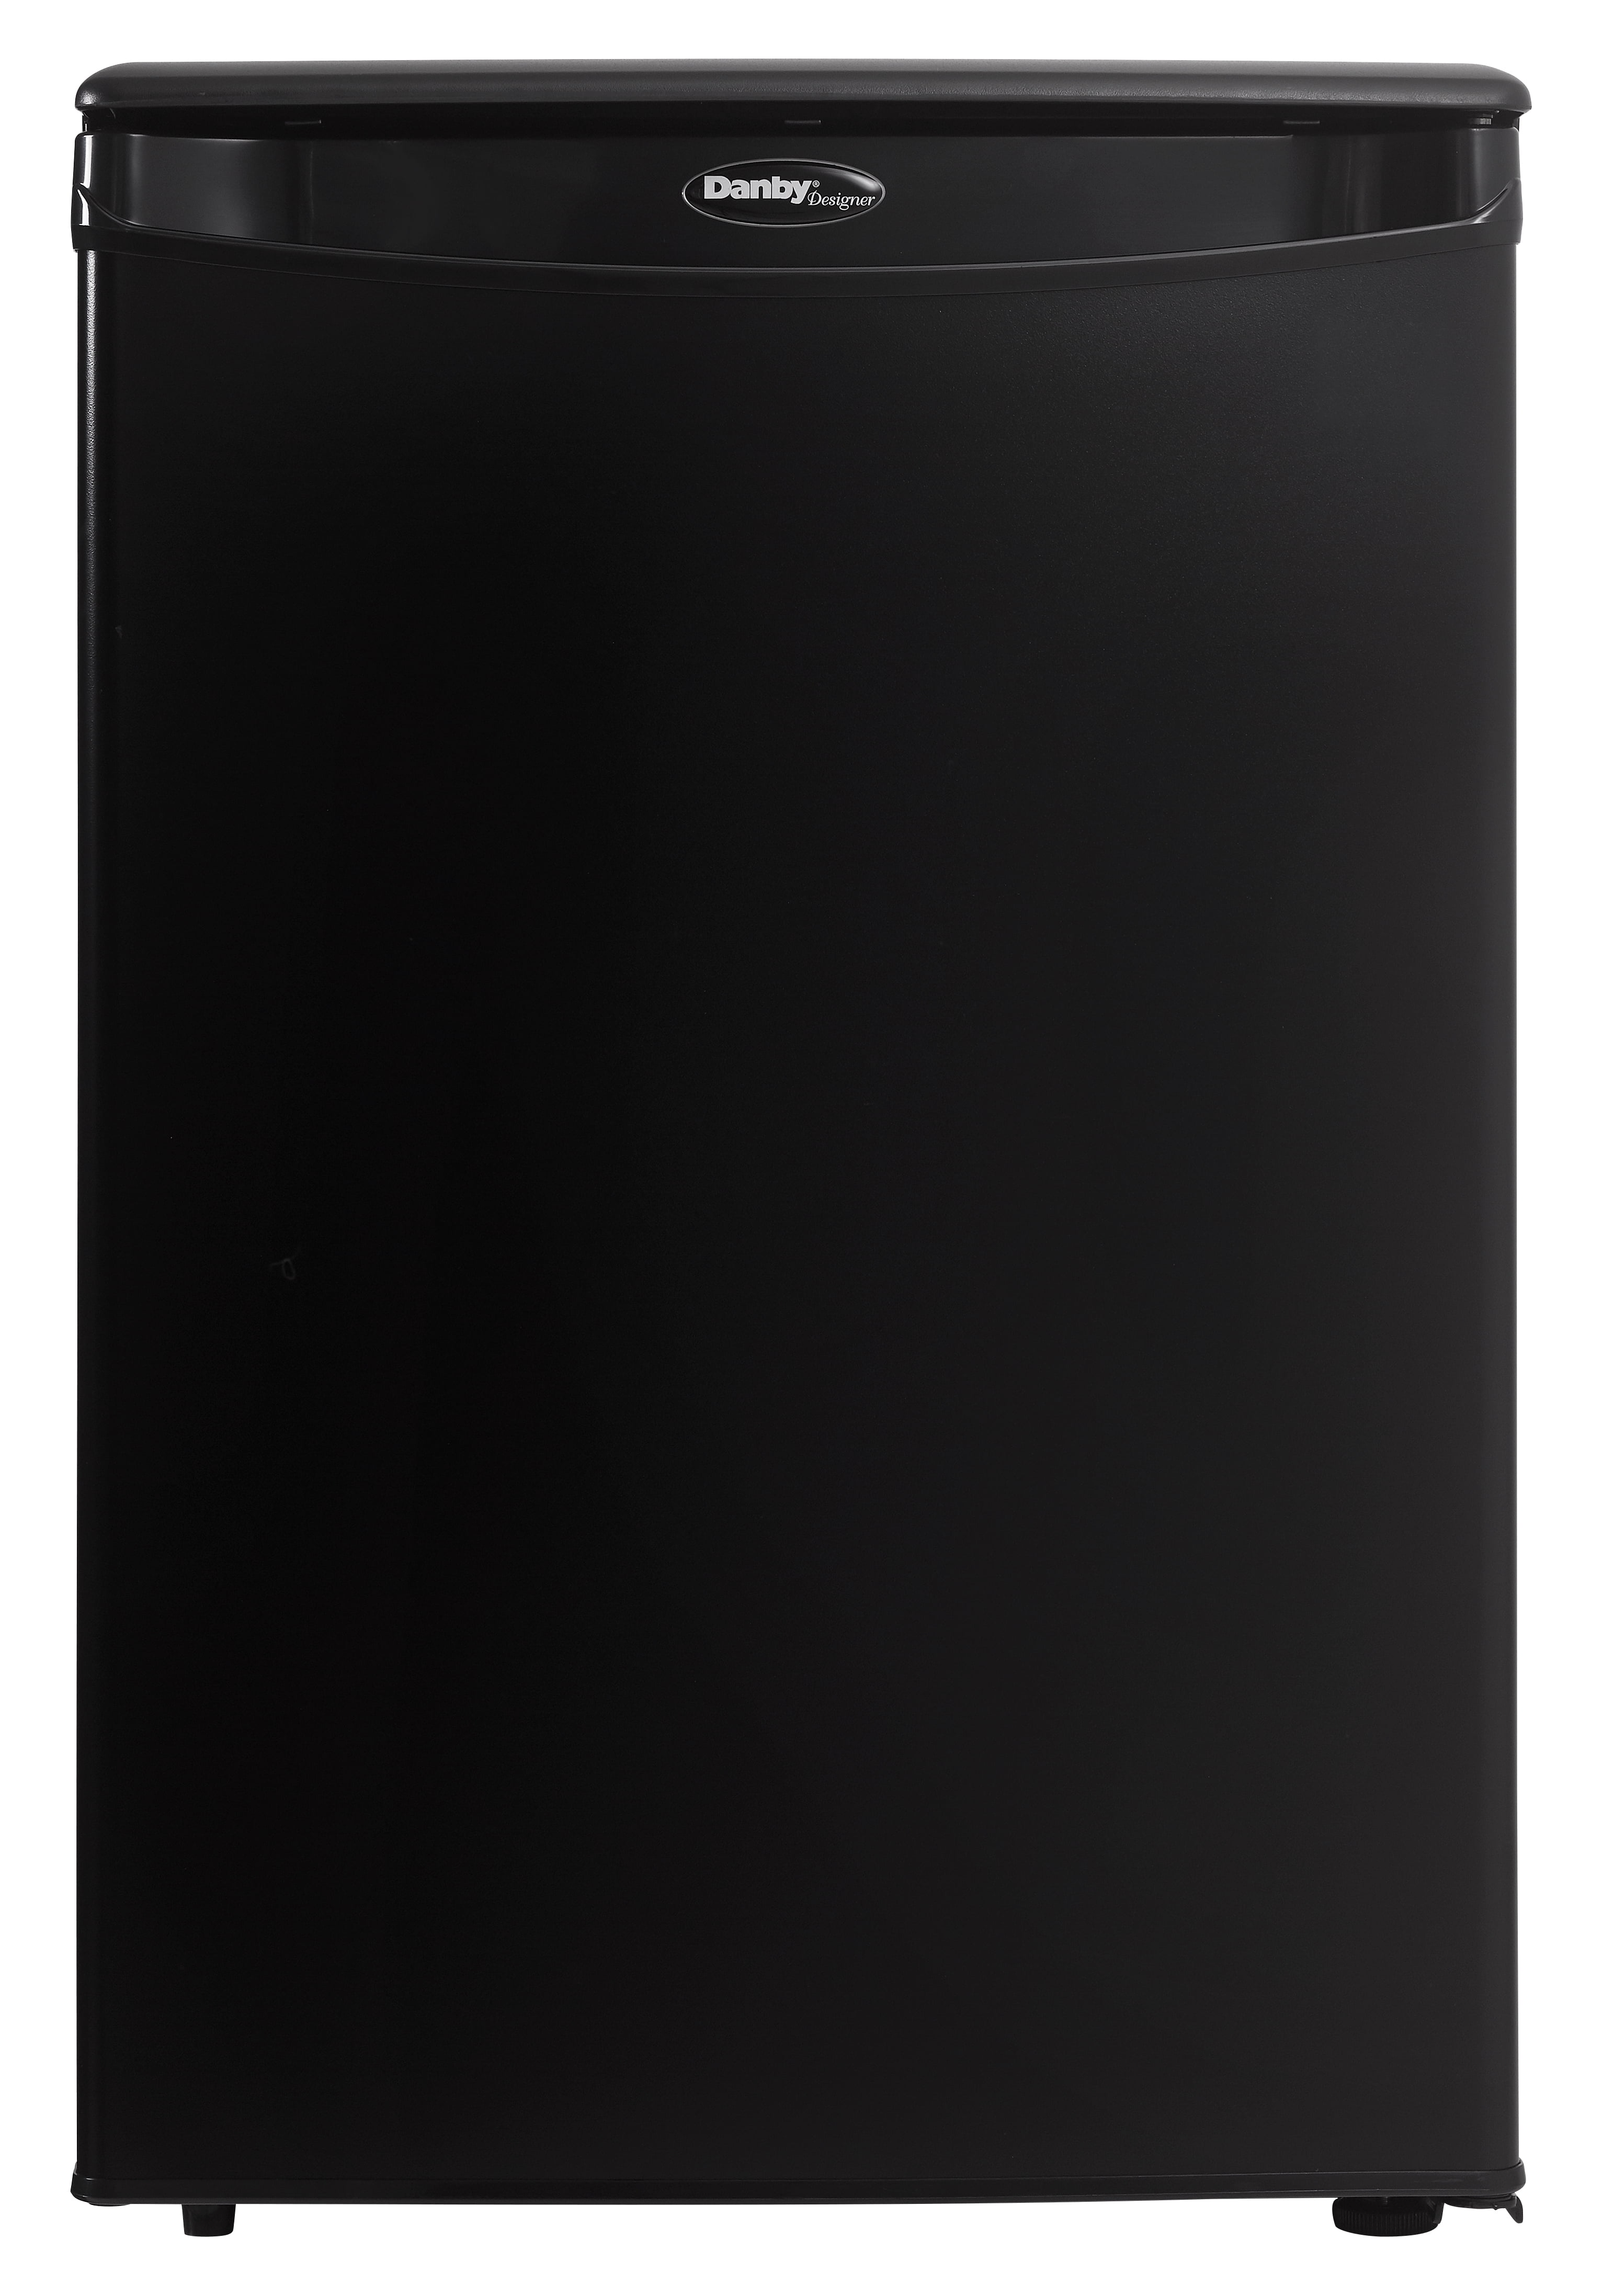 Refrigerator Personal Appliance Black Single Door Mini Fridge Compact 1.7 Cu Ft 